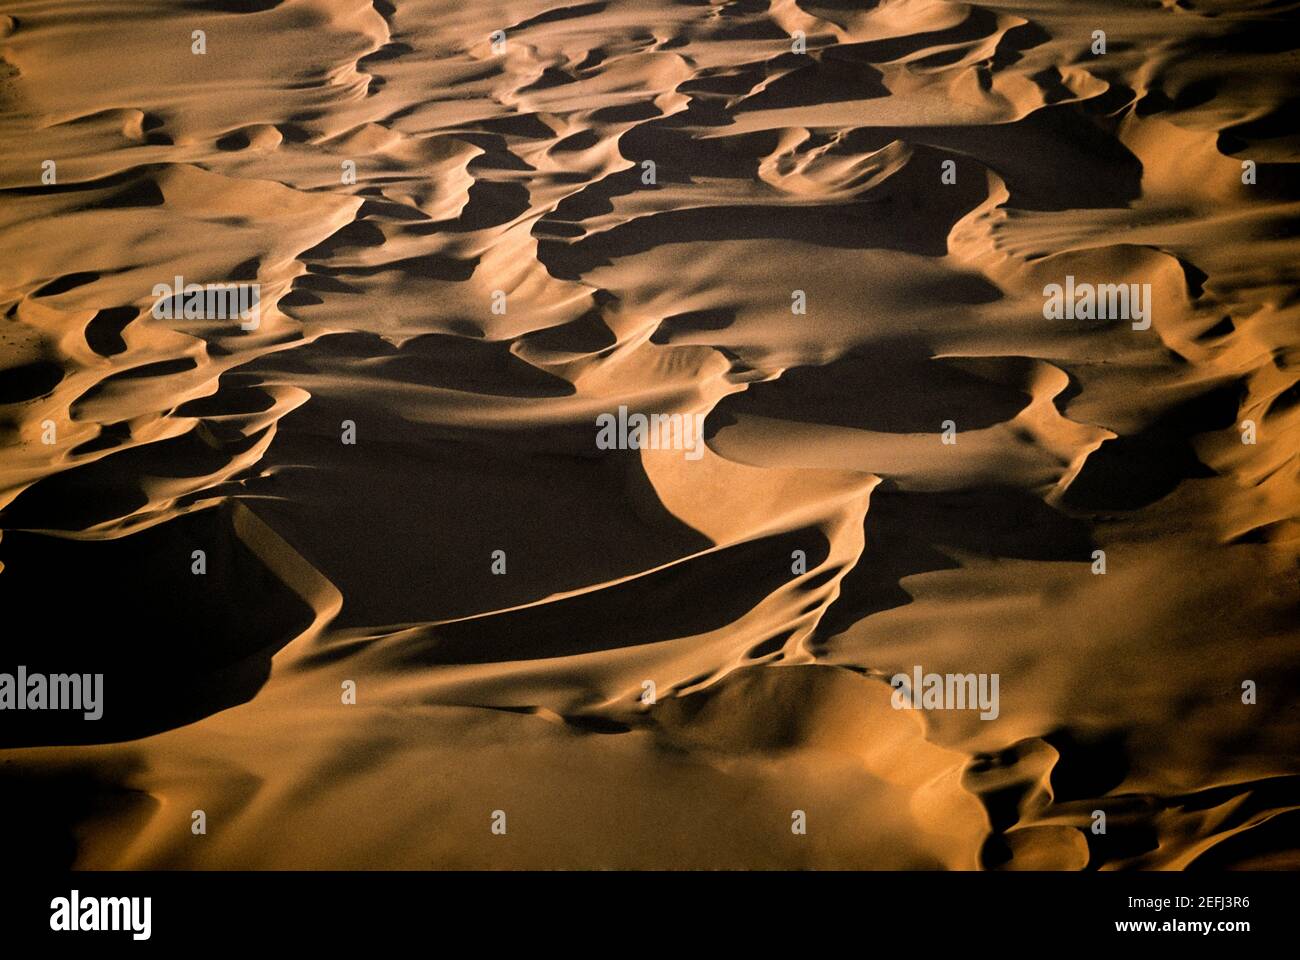 Dune nel deserto del Namib, Namibia, vista aerea Foto Stock